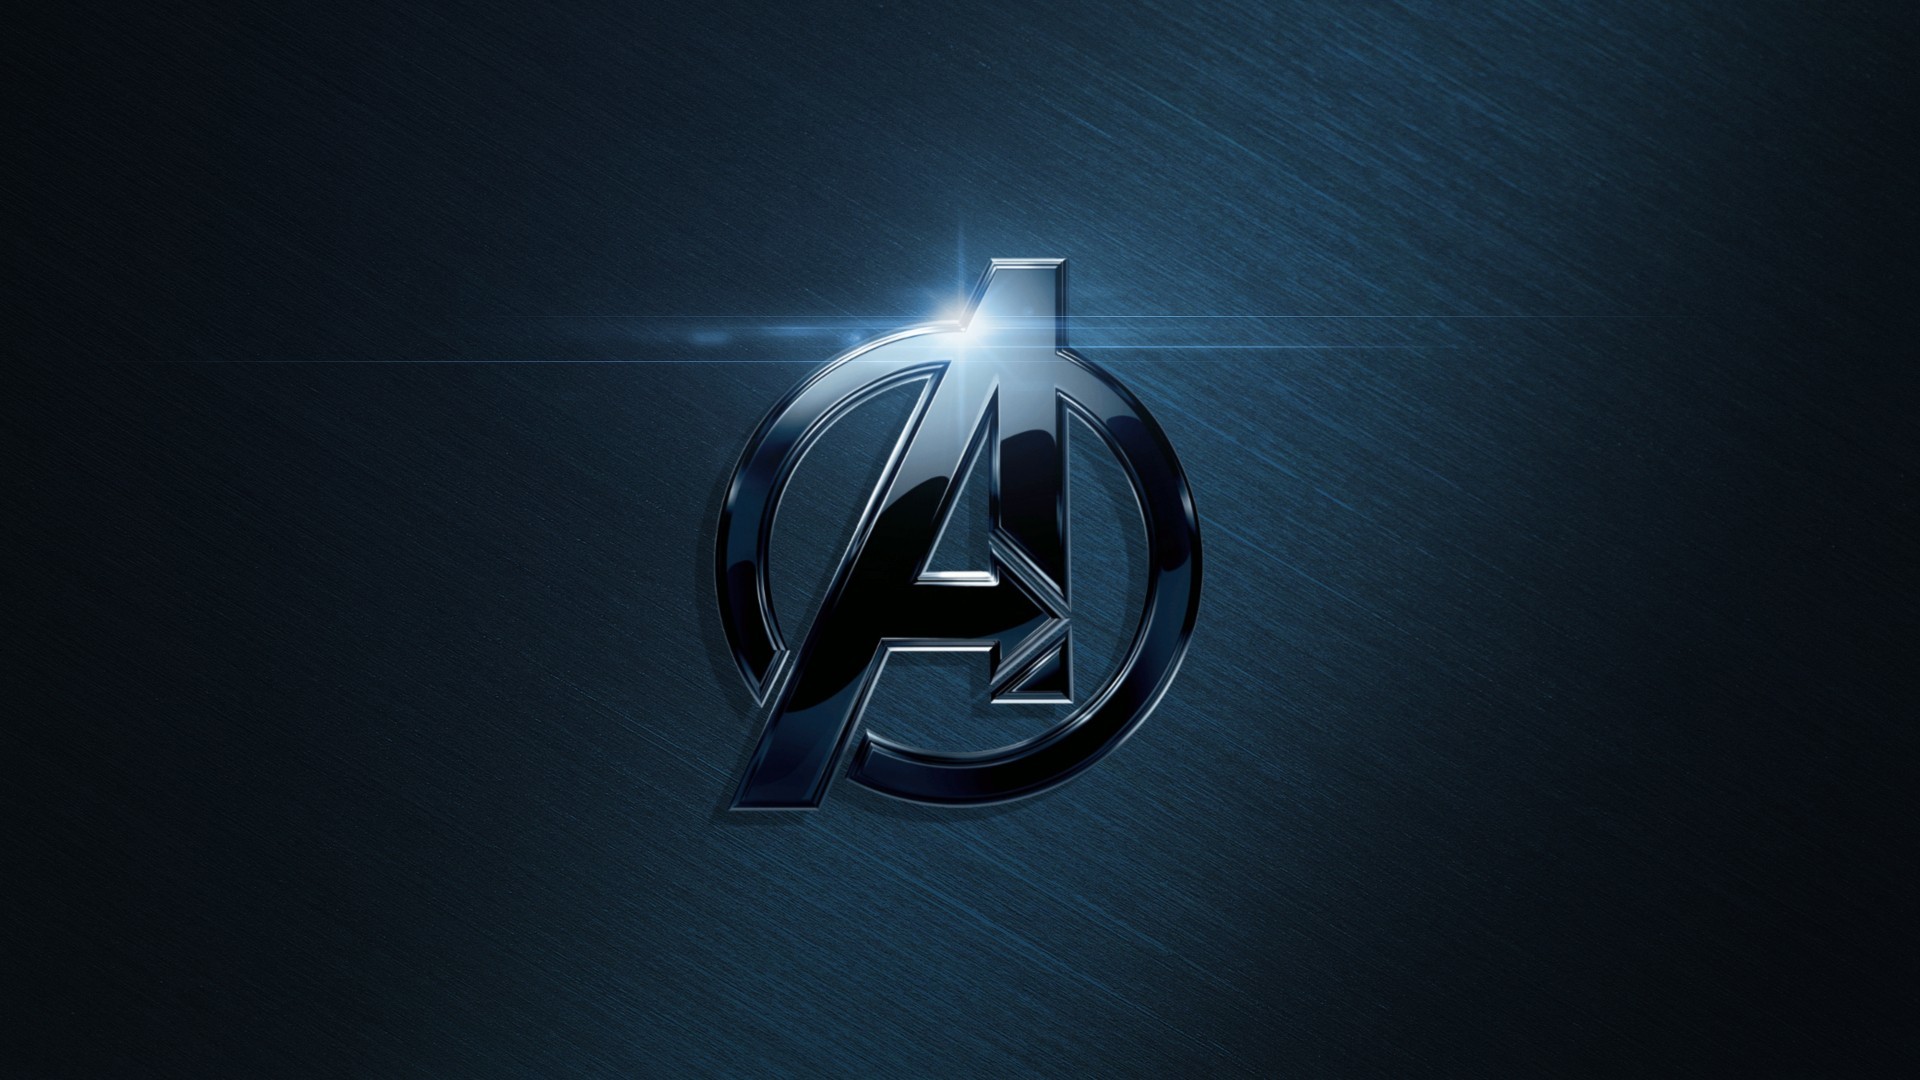 Captain America in Avengers Infinity War Wallpaper | HD Wallpapers